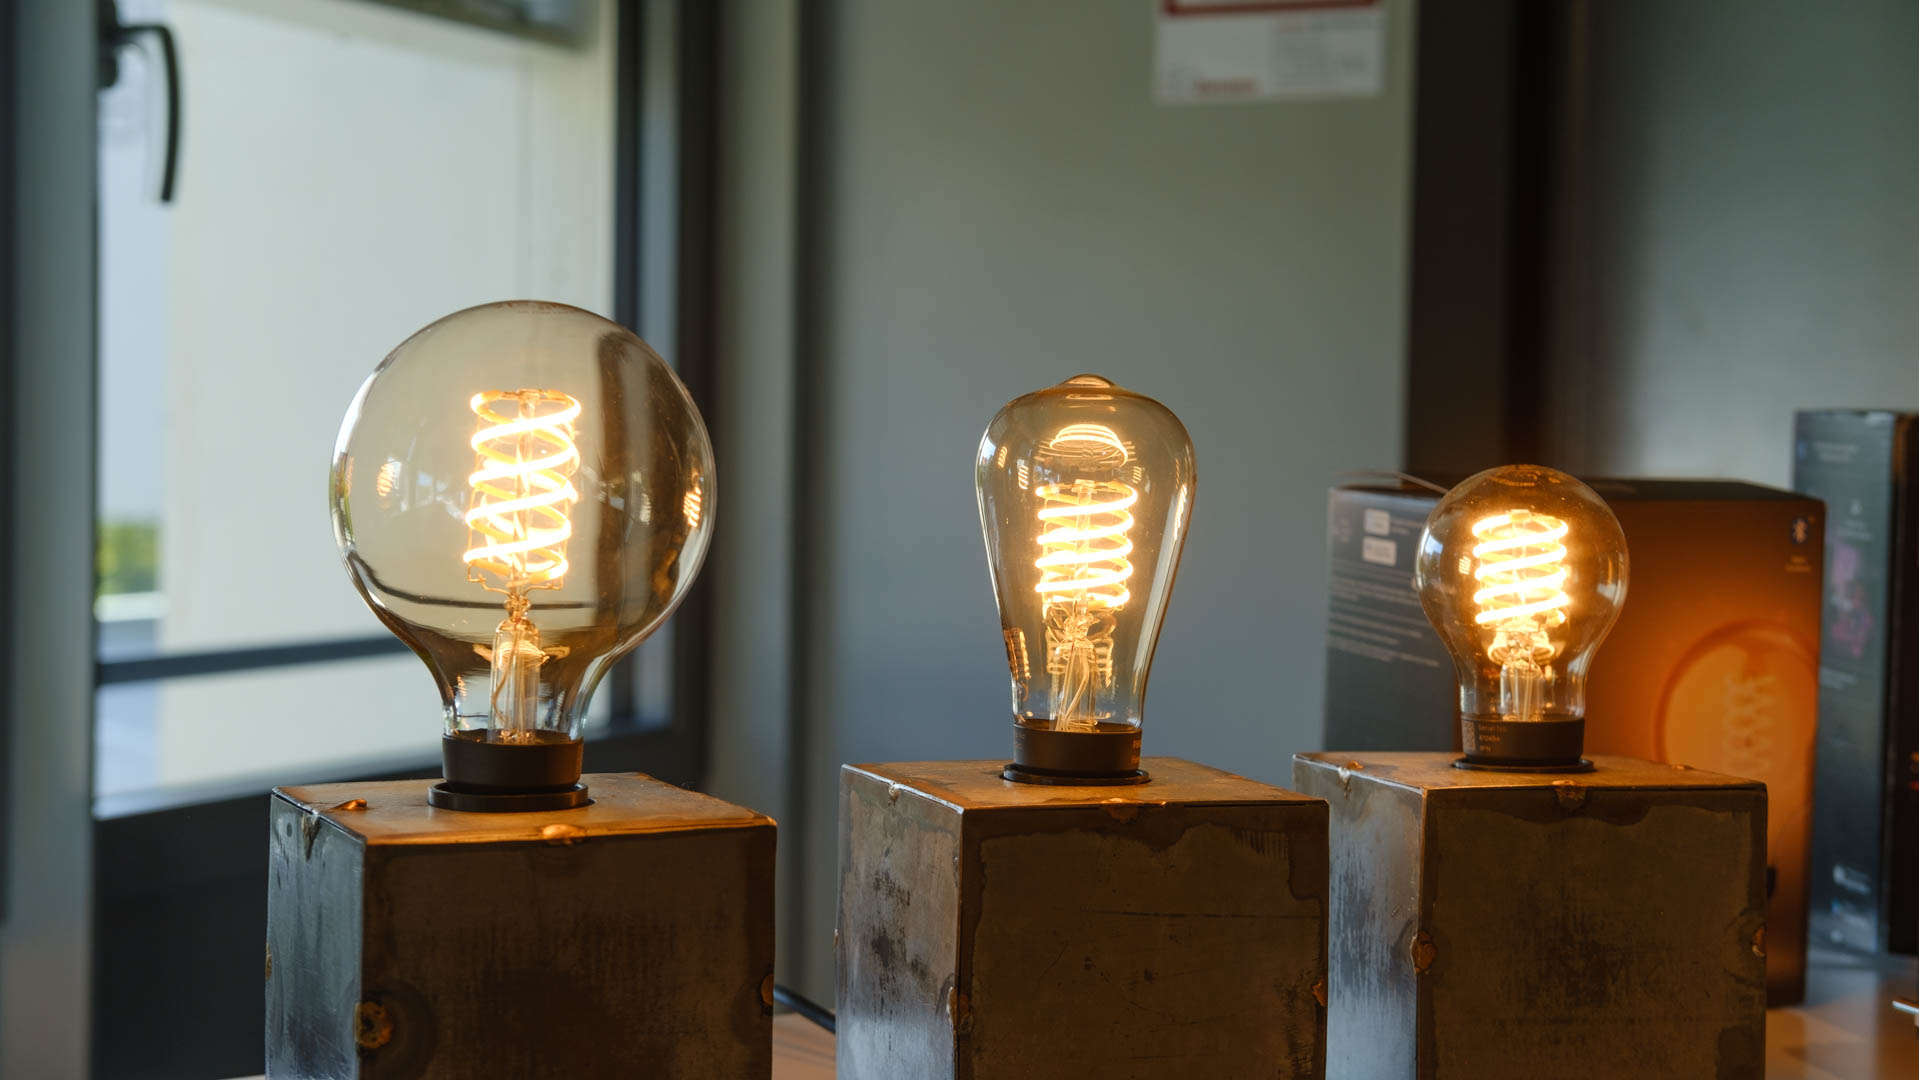 Phillips Hue smart edison bulbs 3